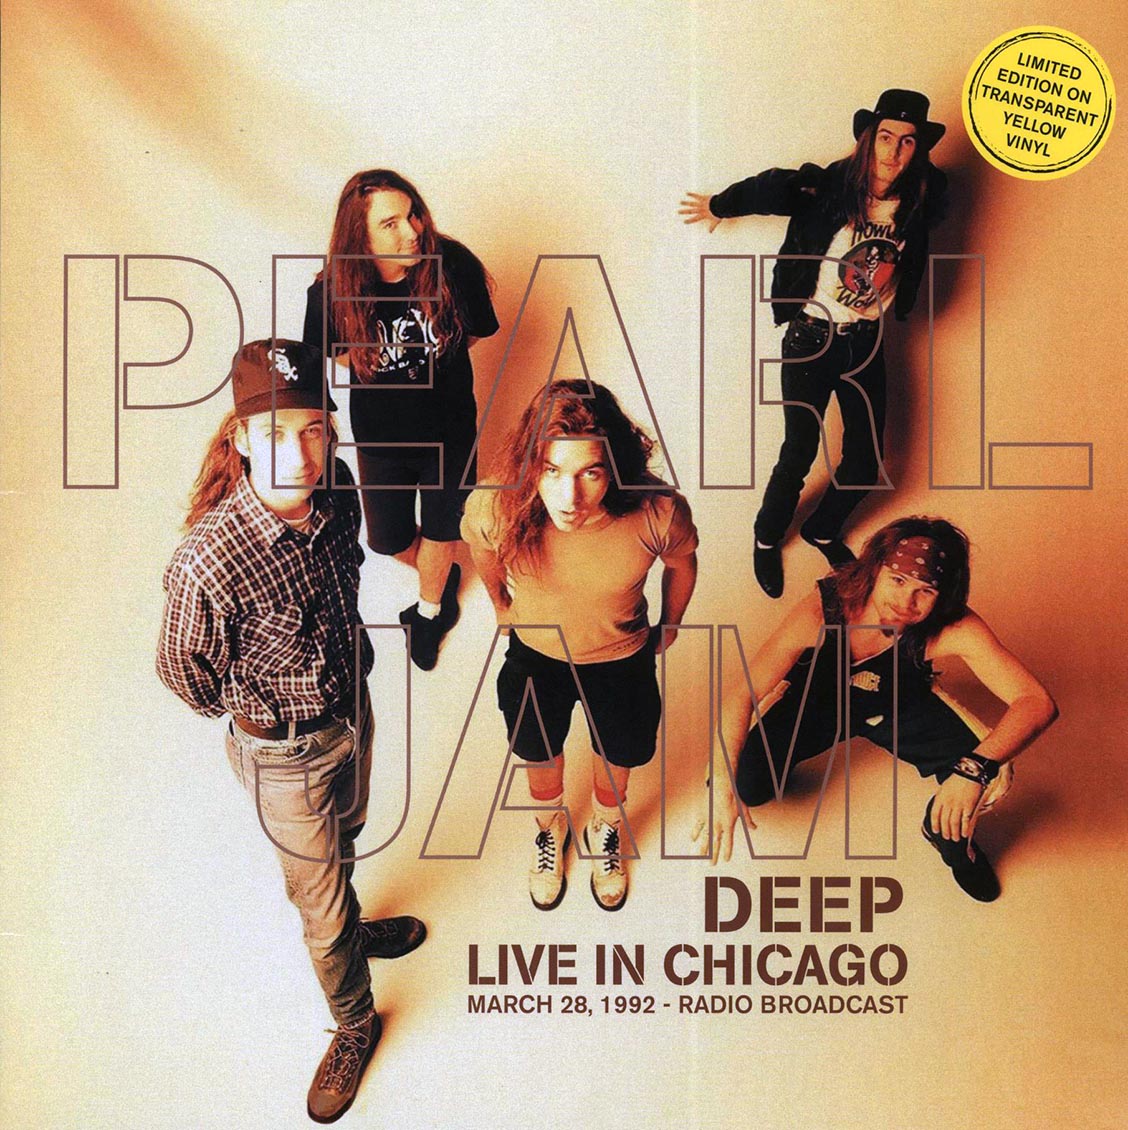 Pearl Jam - Deep: Live In Chicago, March 28, 1992 (ltd. 500 copies made) (yellow vinyl) - Vinyl LP